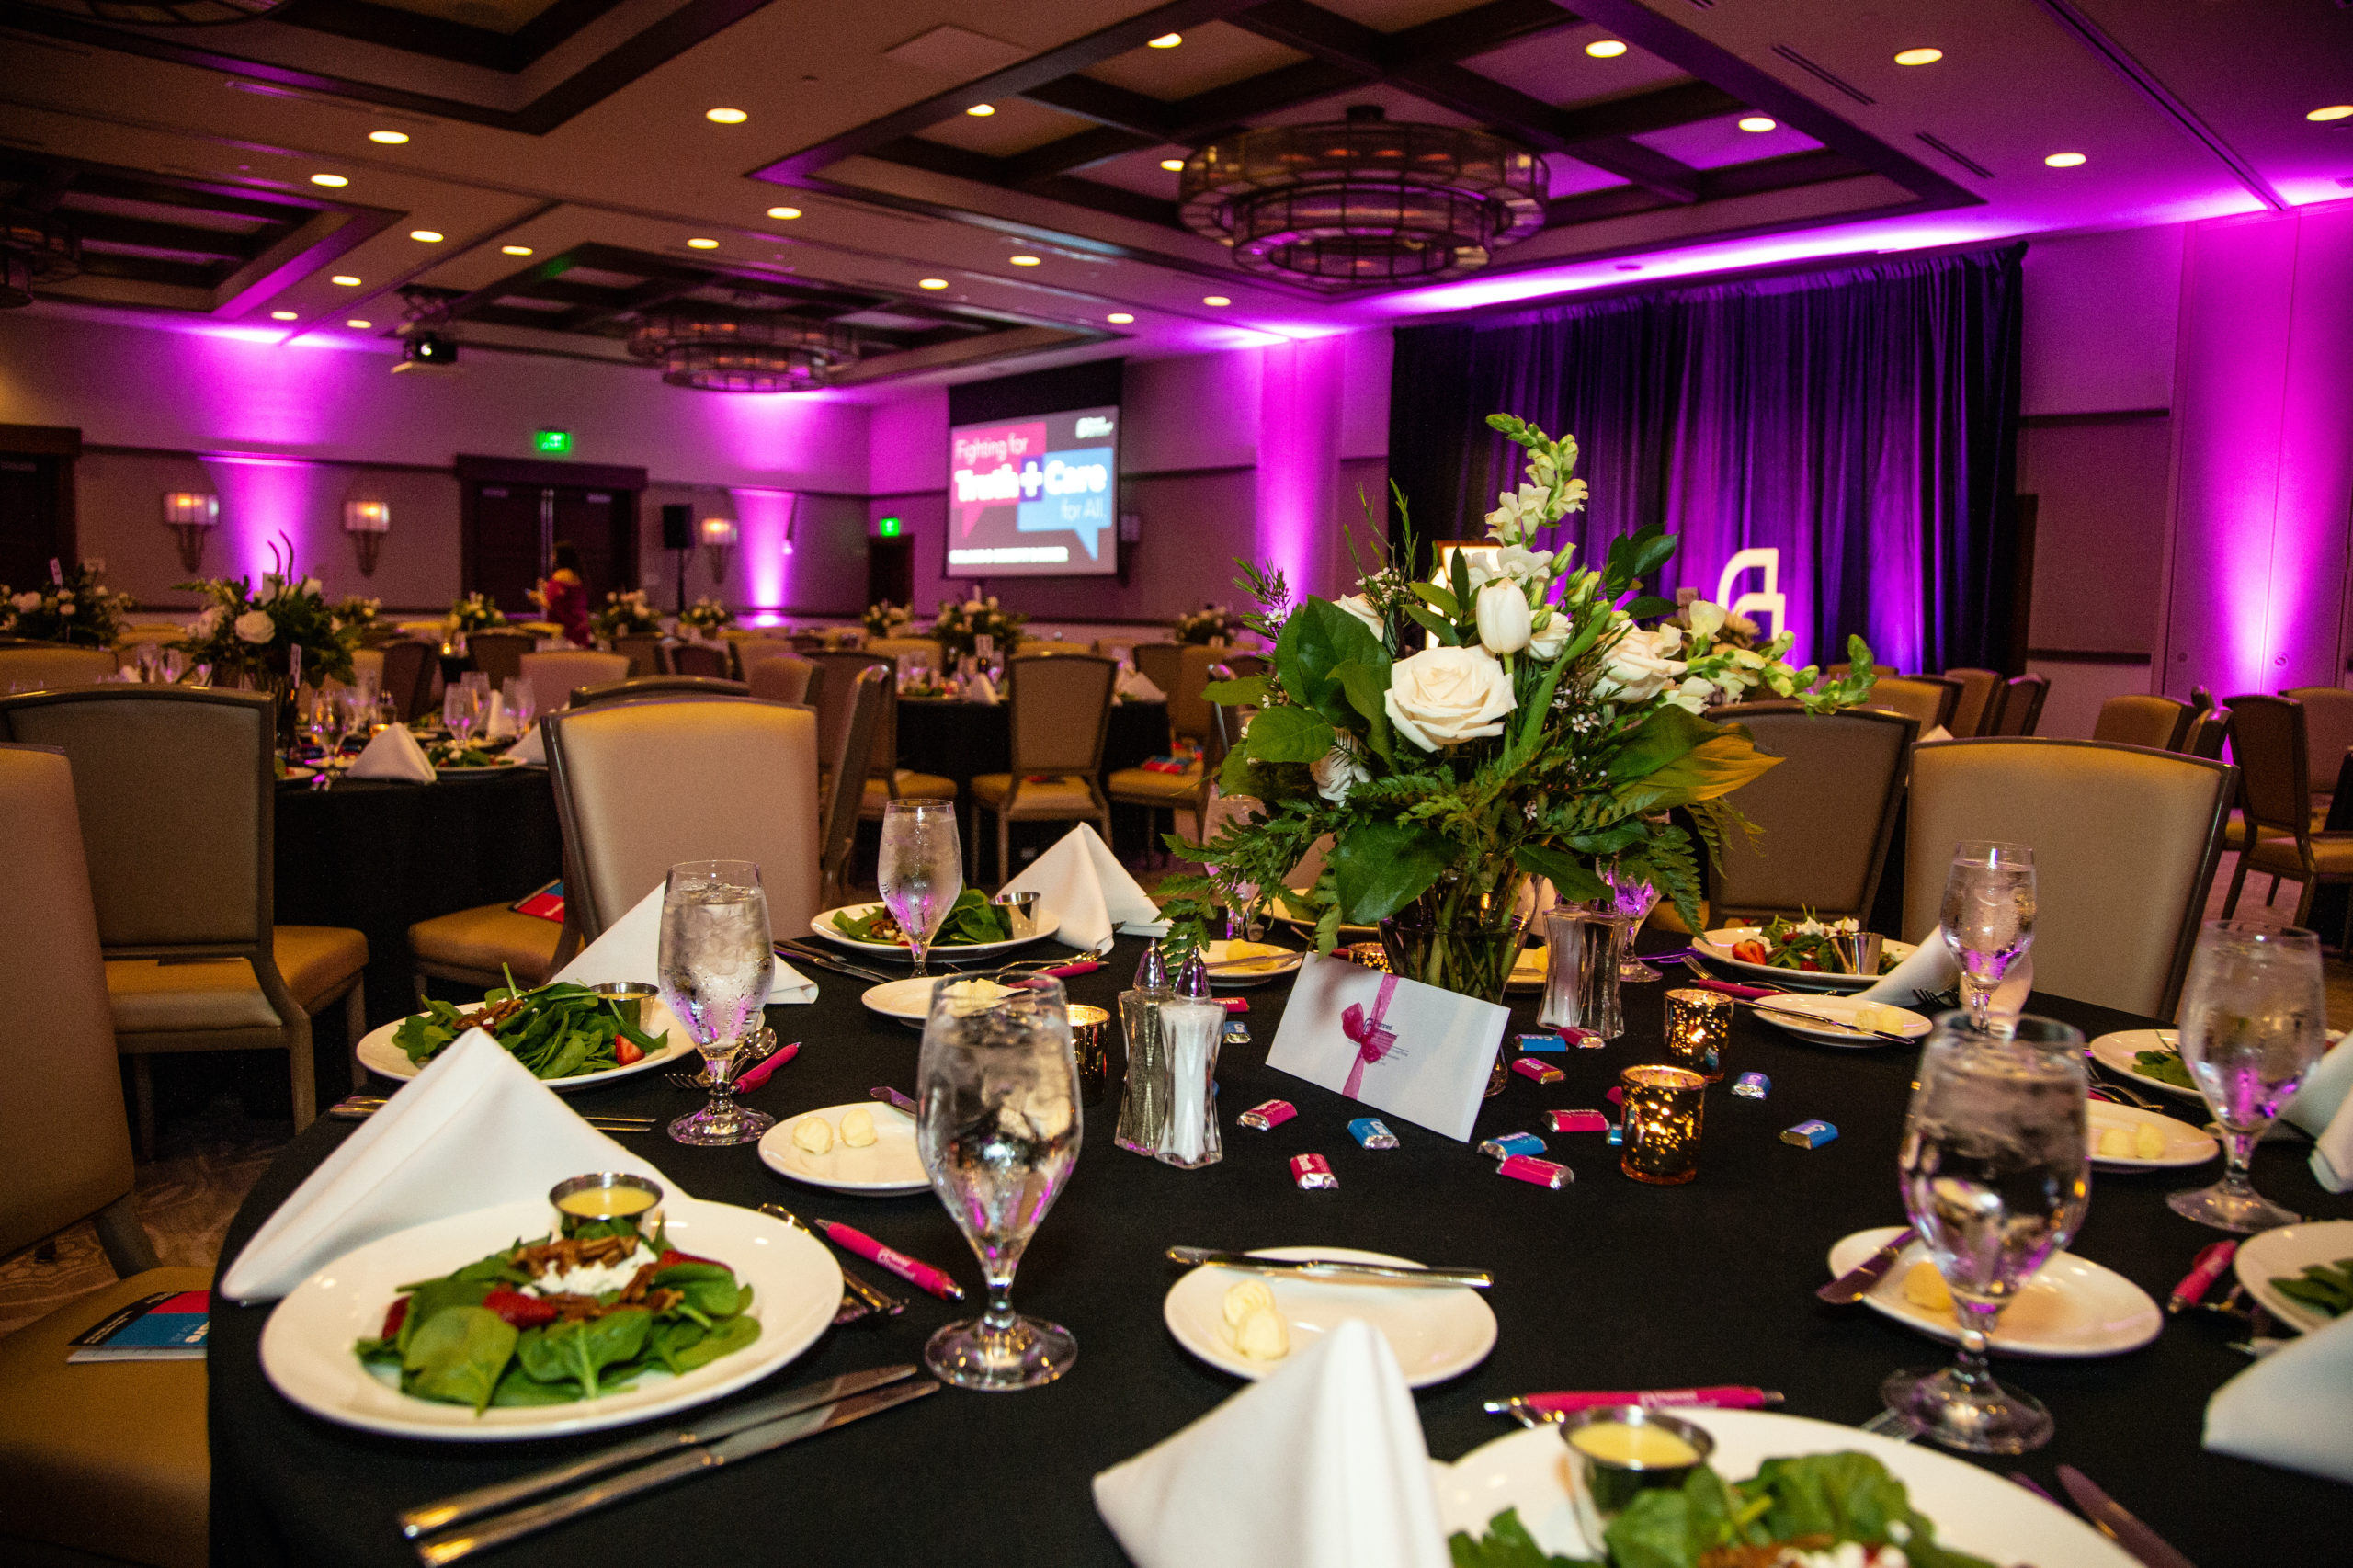 Pink Uplighting | Gala Room Design | Fundraiser | Orlando Event Planner